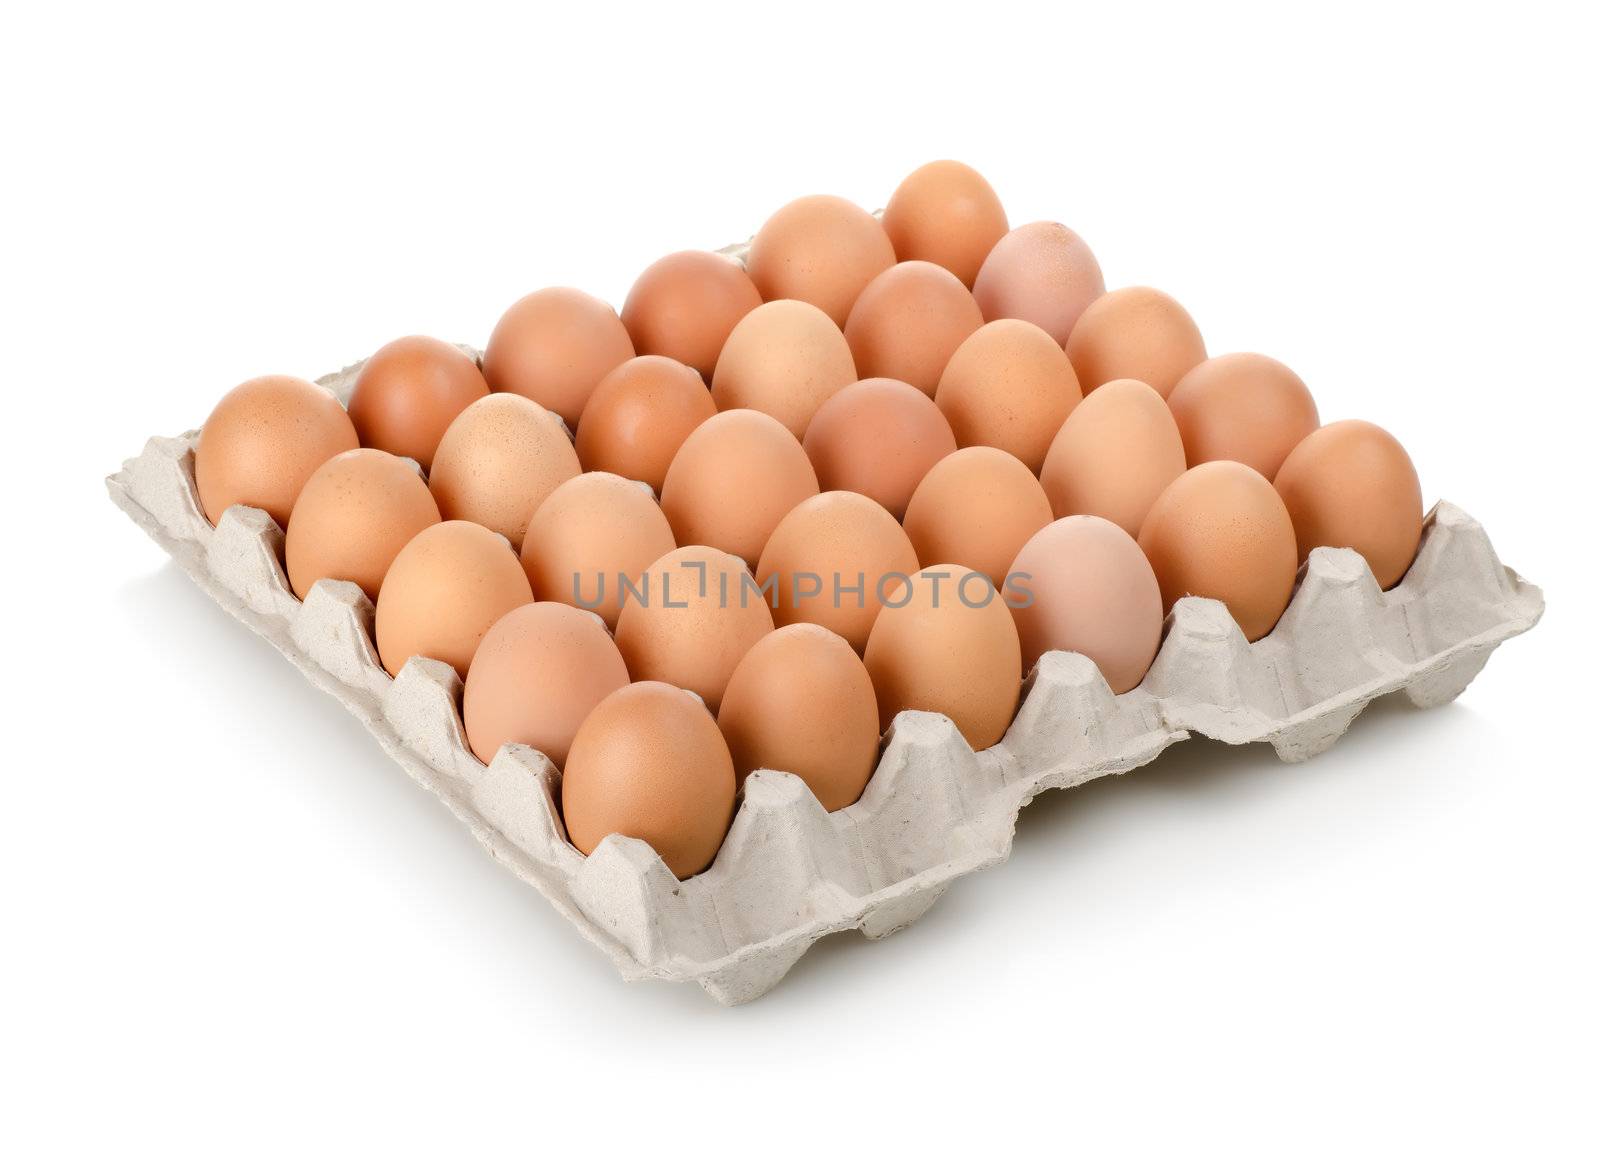 Eggs in a carton by Givaga